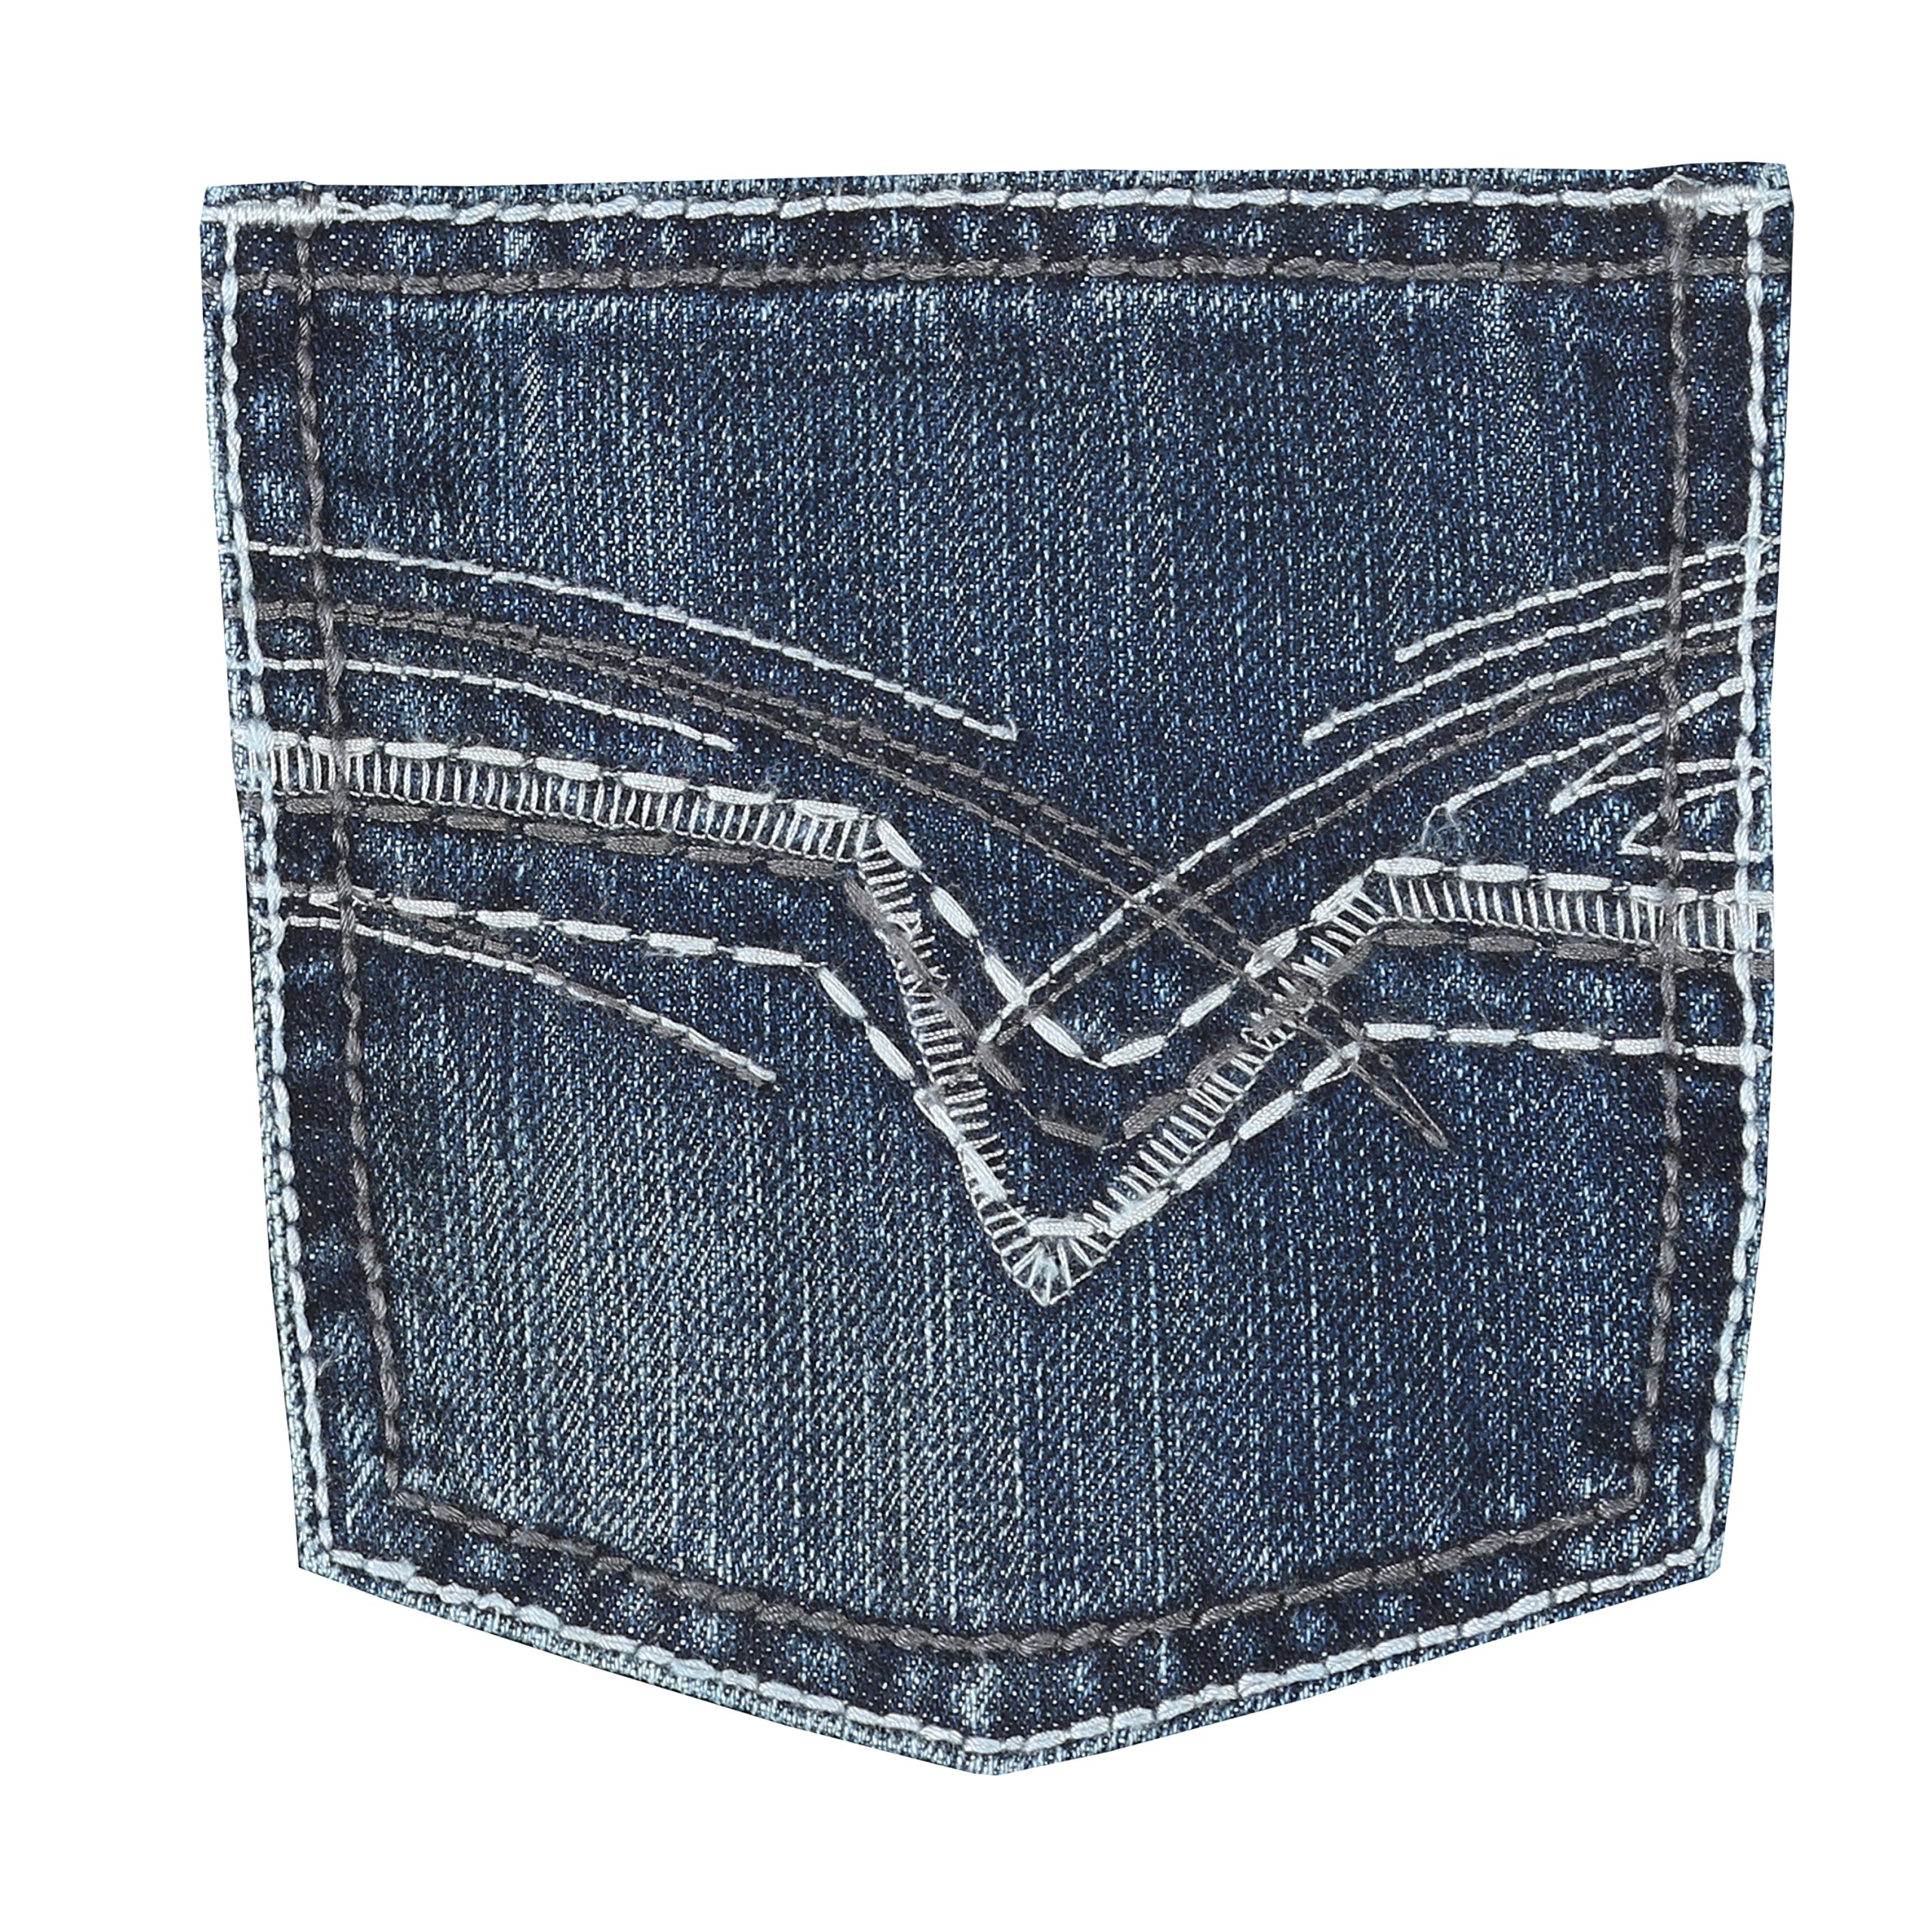 Wrangler Boys' 20X Vintage Boot Cut Jean